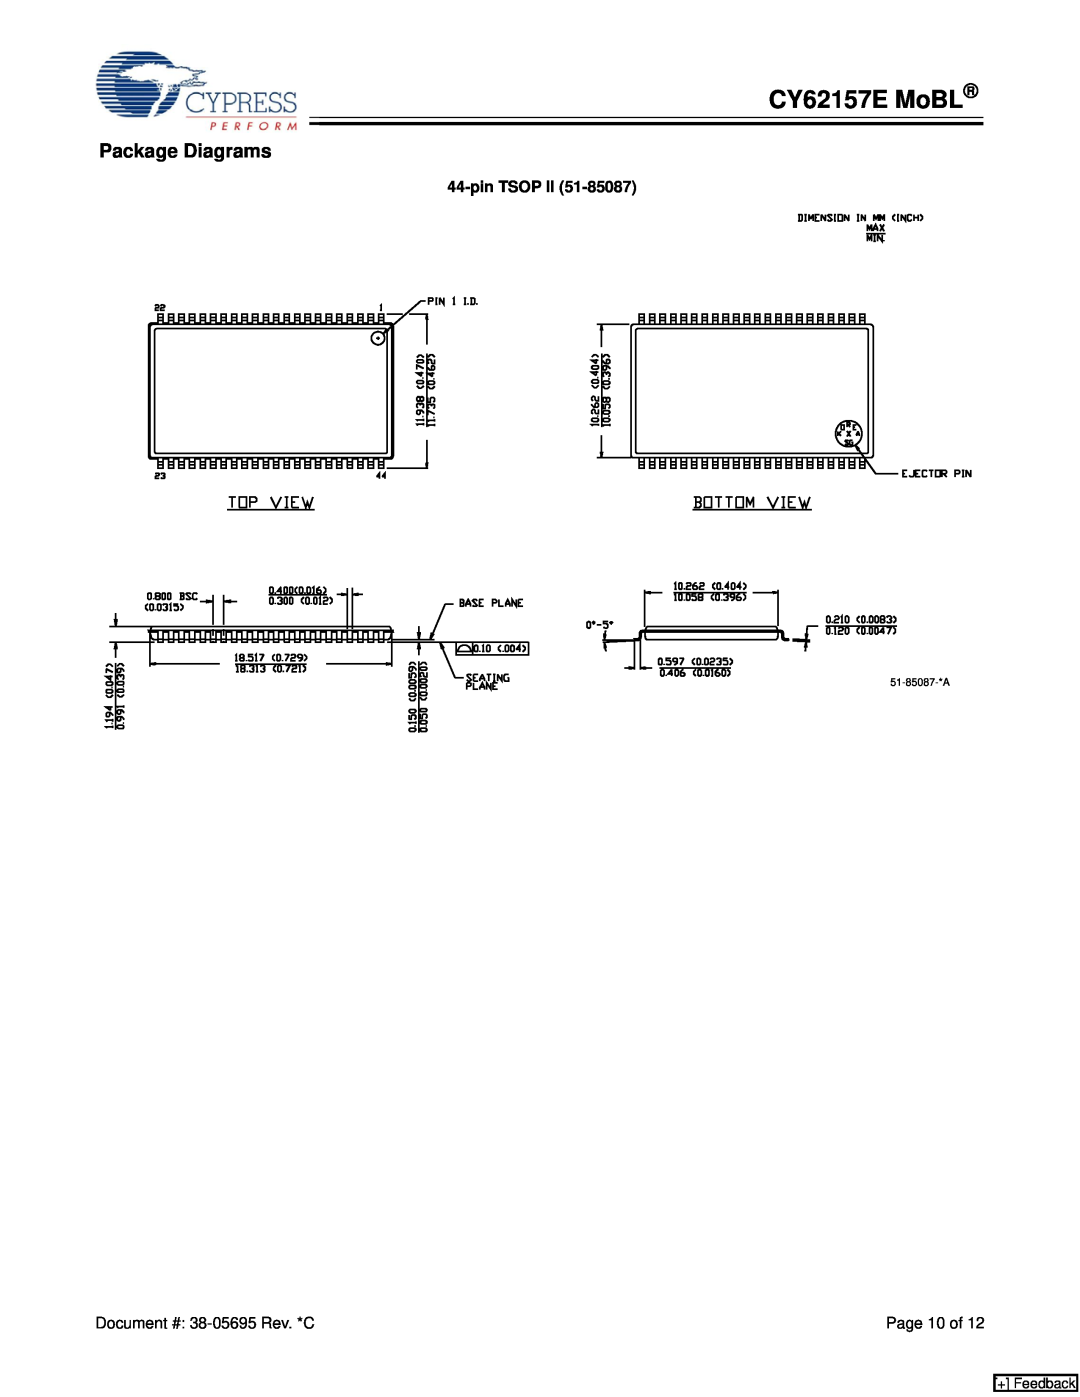 Cypress manual Package Diagrams, CY62157E MoBL, pin TSOP II, + Feedback 